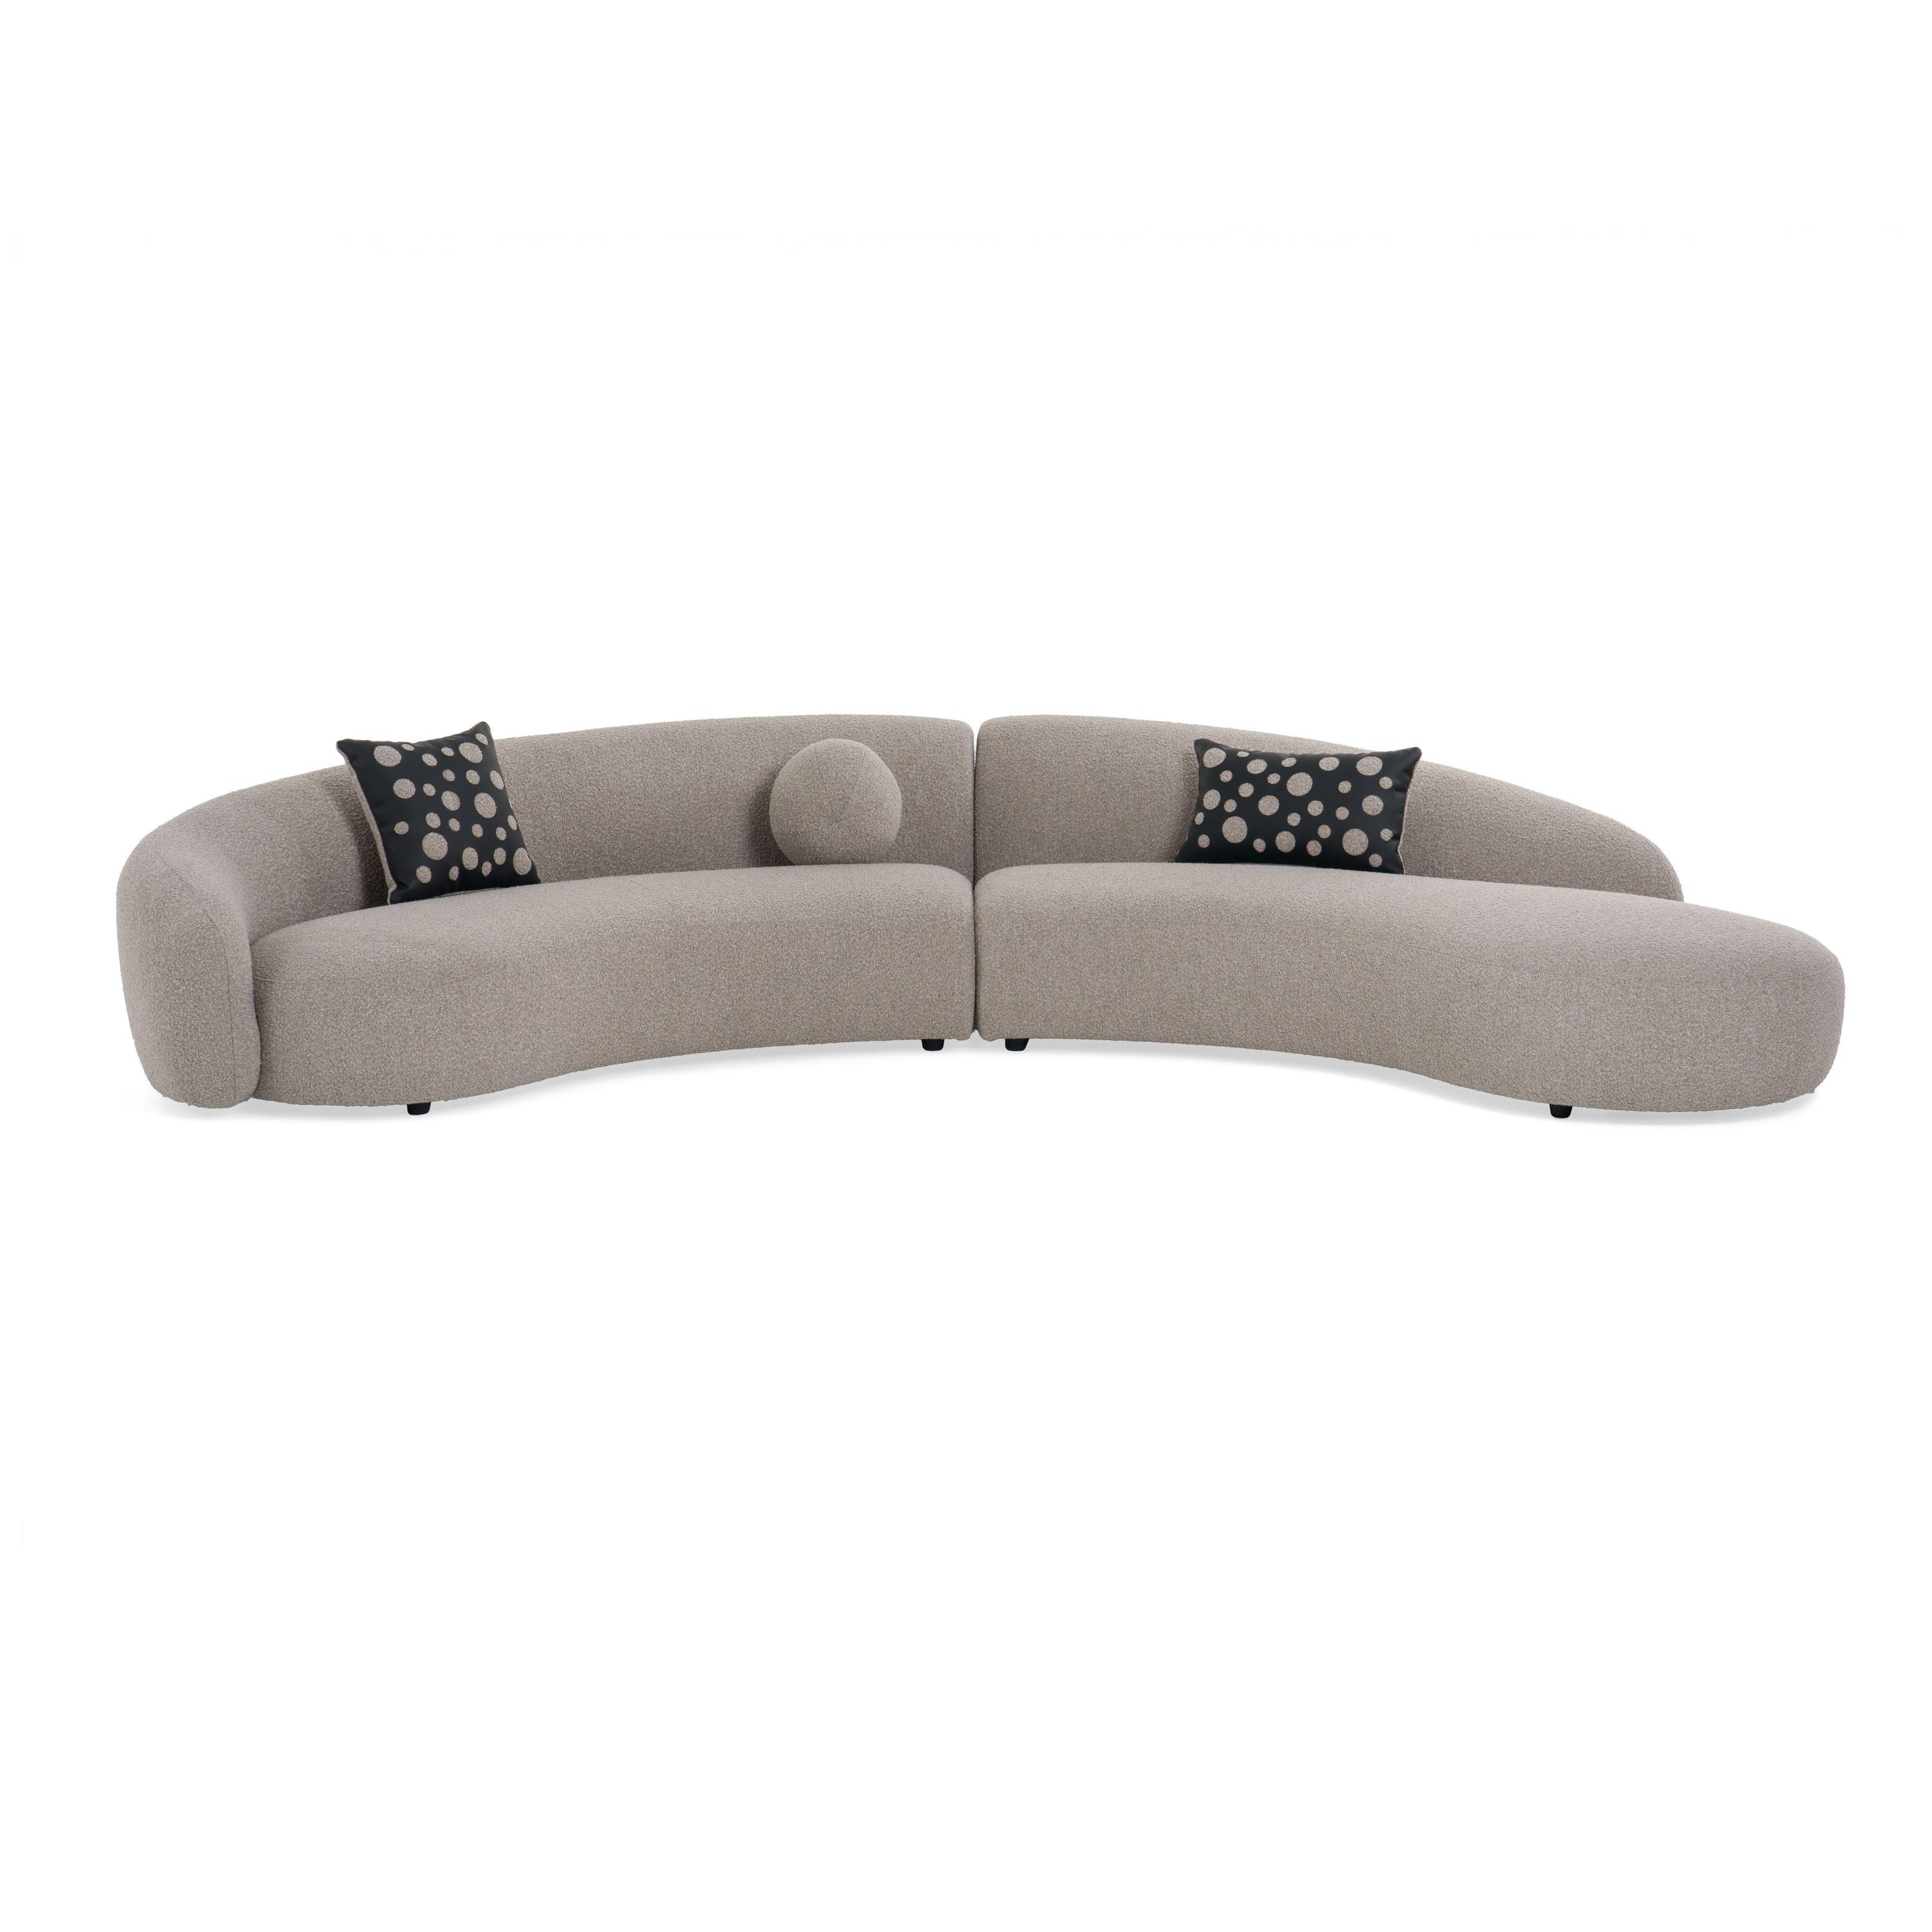 Contemporary, Modern Sectional Sofa Set Allis Sectional Sofa VGOD-ZW-21032-GRY-SECT VGOD-ZW-21032-GRY-SECT in Gray, Black Fabric